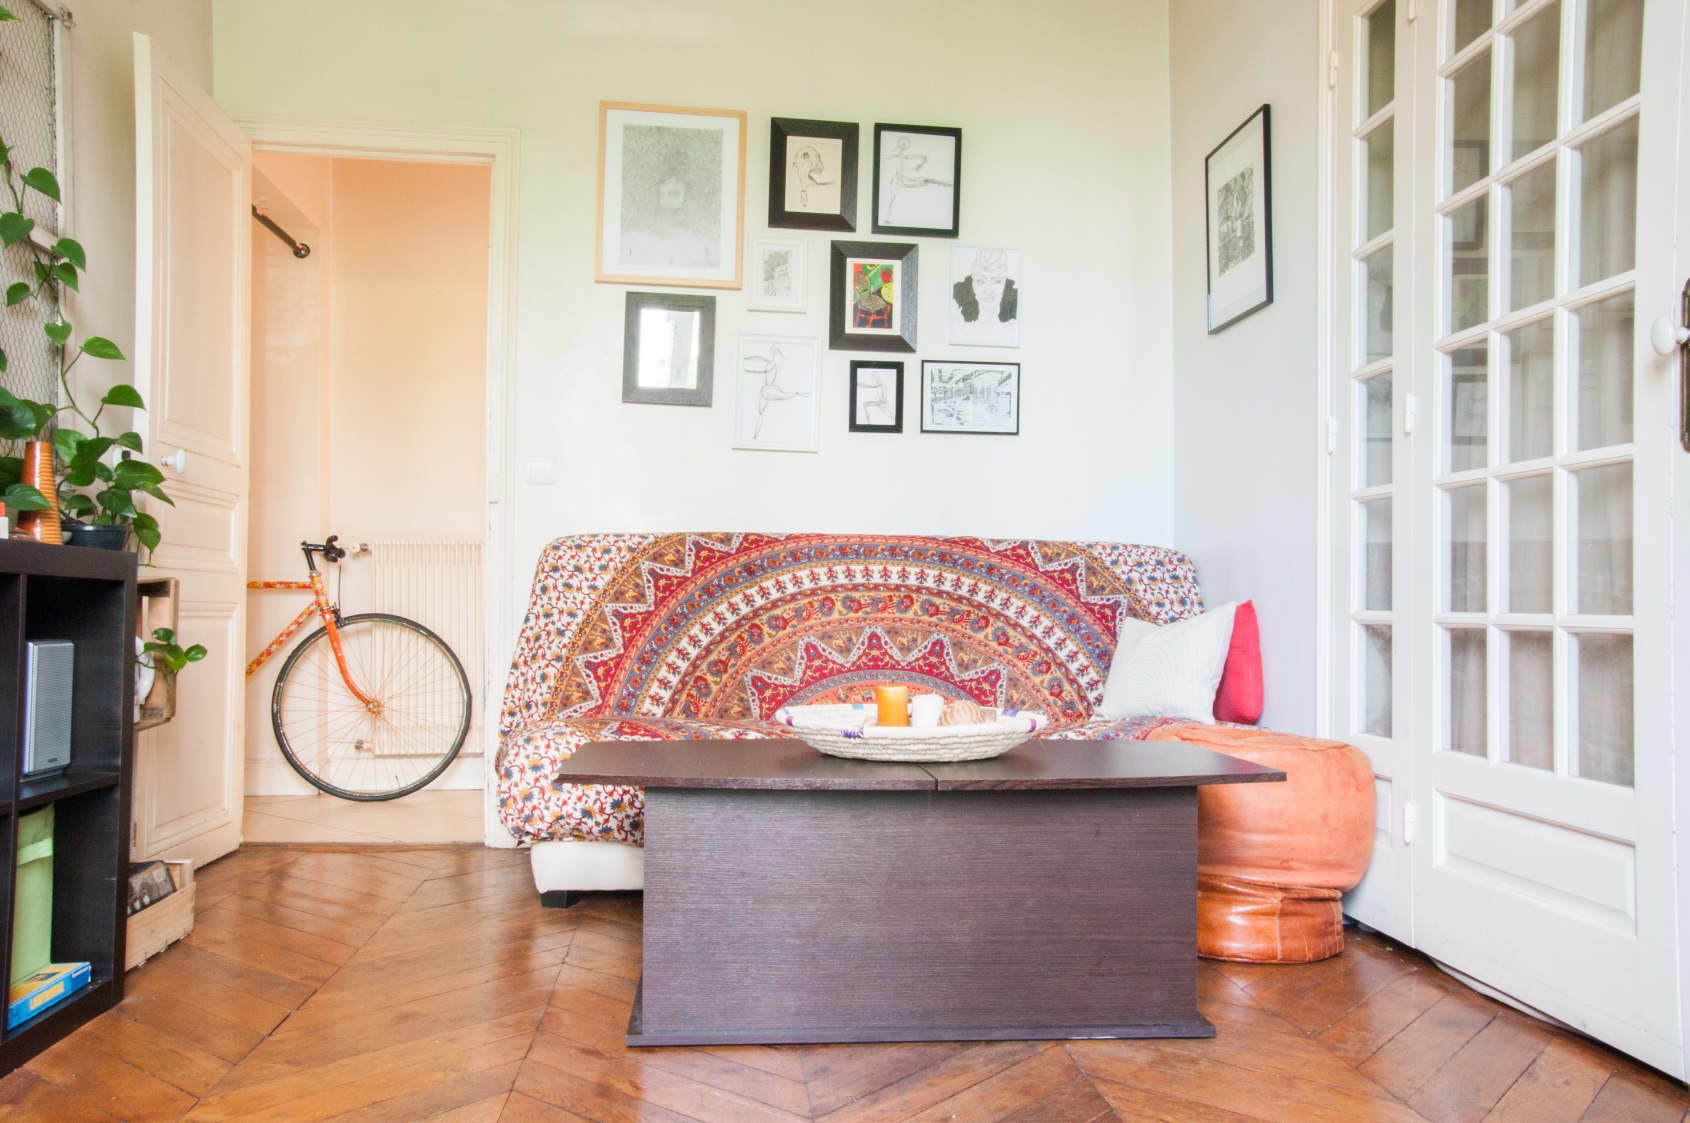 House Tour: A Bohemian Eclectic Parisian Apartment | Apartment Therapy